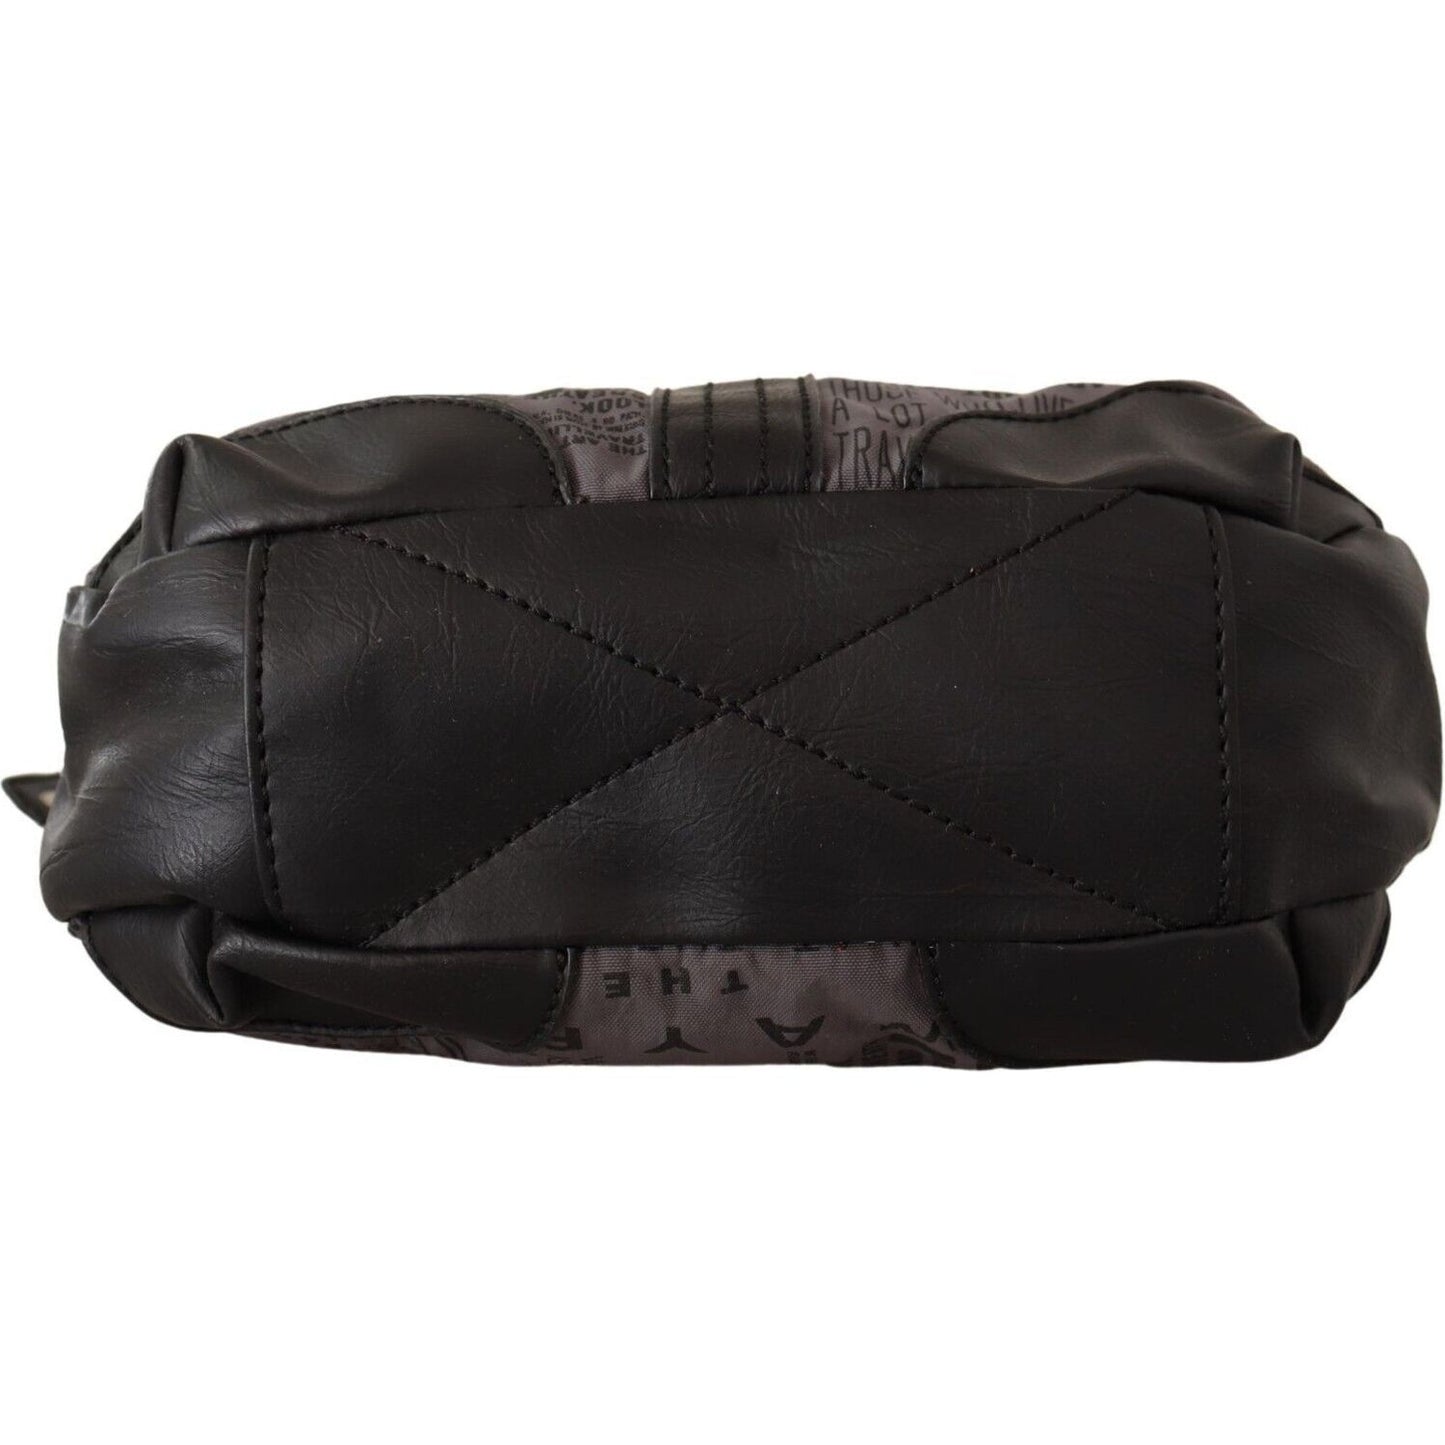 WAYFARER Chic Gray Fabric Shoulder Handbag Shoulder Bag gray-printed-handbag-shoulder-purse-fabric-bag